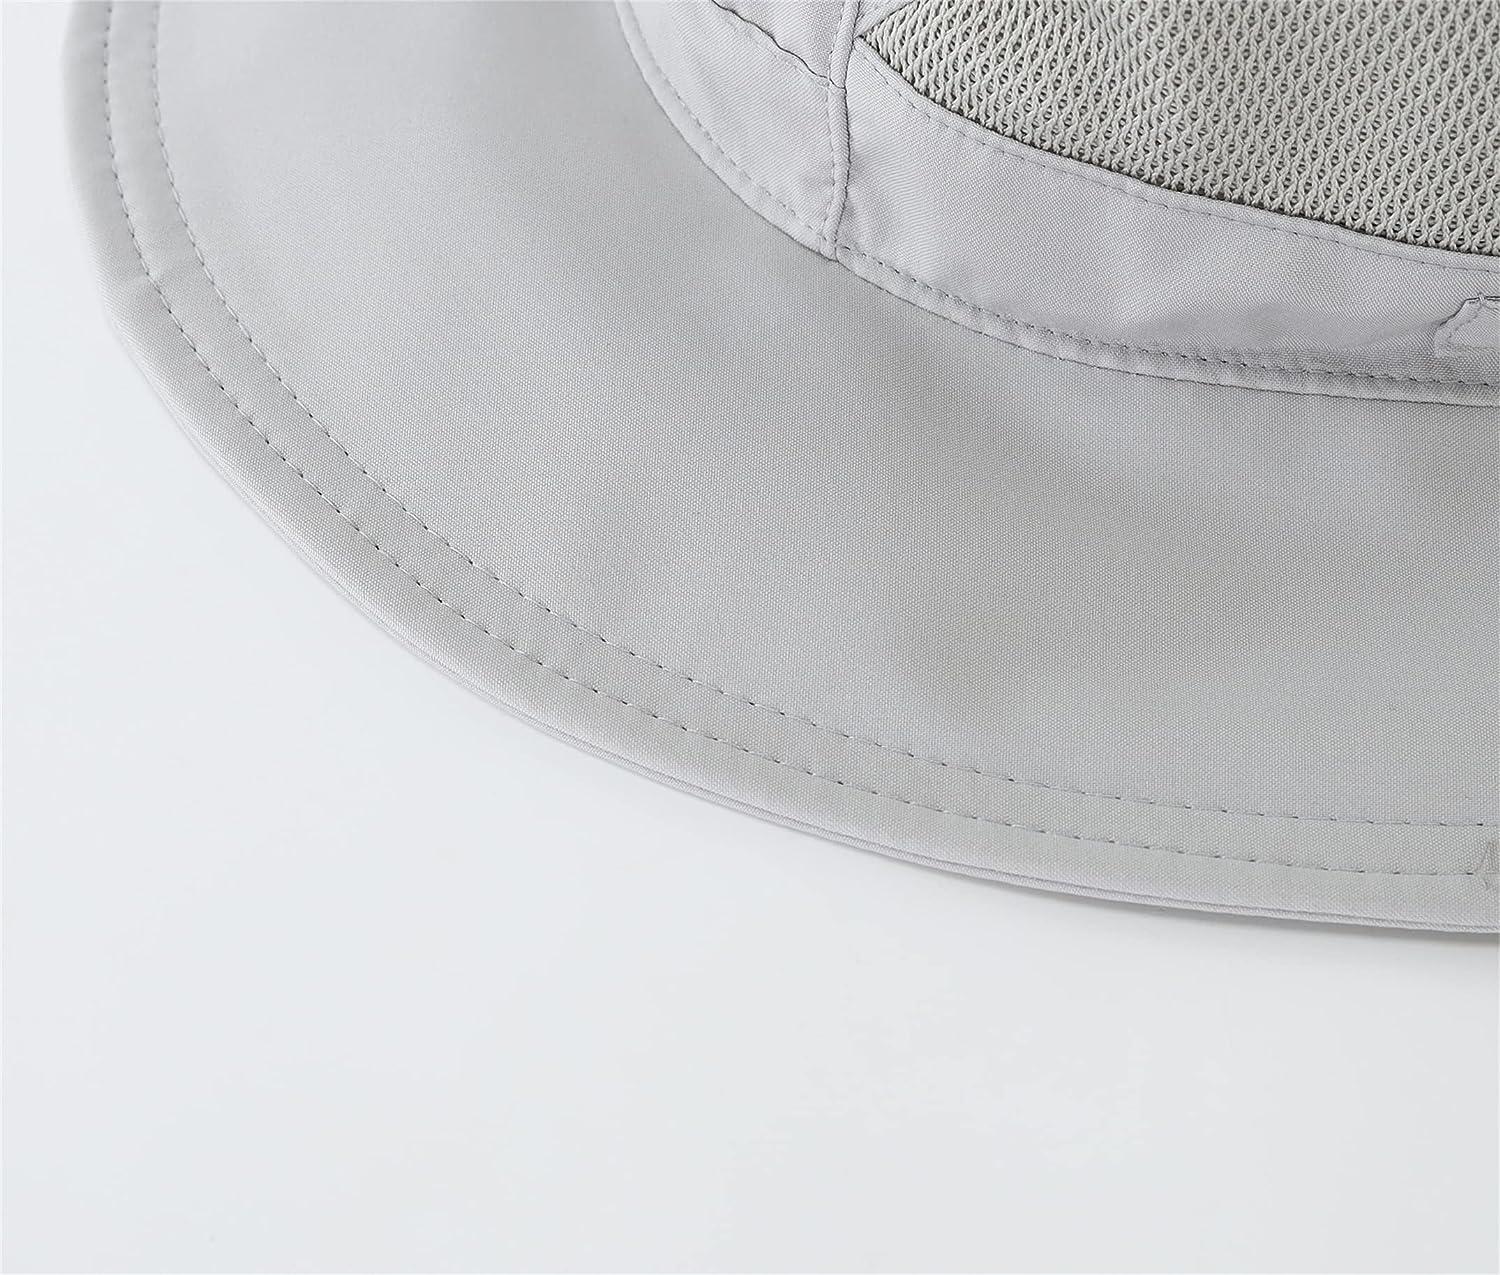 Connectyle Women's UPF 50+ Safari Sun Hat Breathable UV Protection Fishing  Hat Light Grey